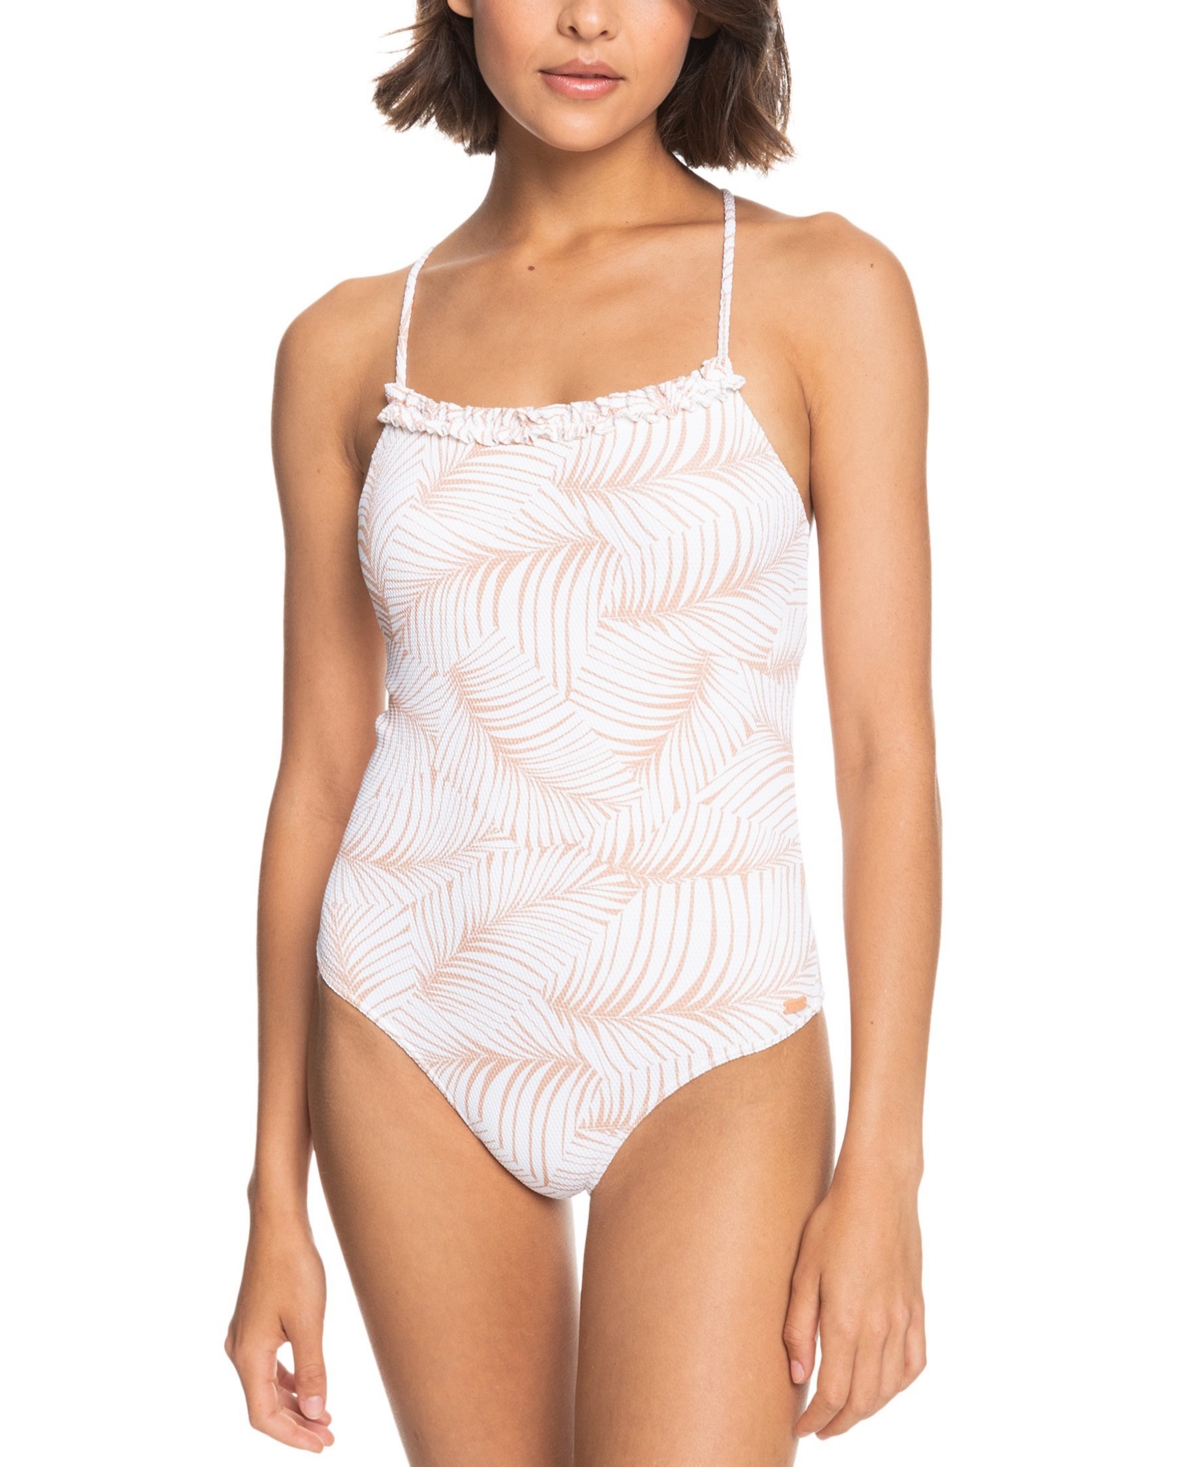 Roxy Juniors' Palm Tree Dreams Printed Cross-Back One-Piece Swimsuit Women's Swimsuit